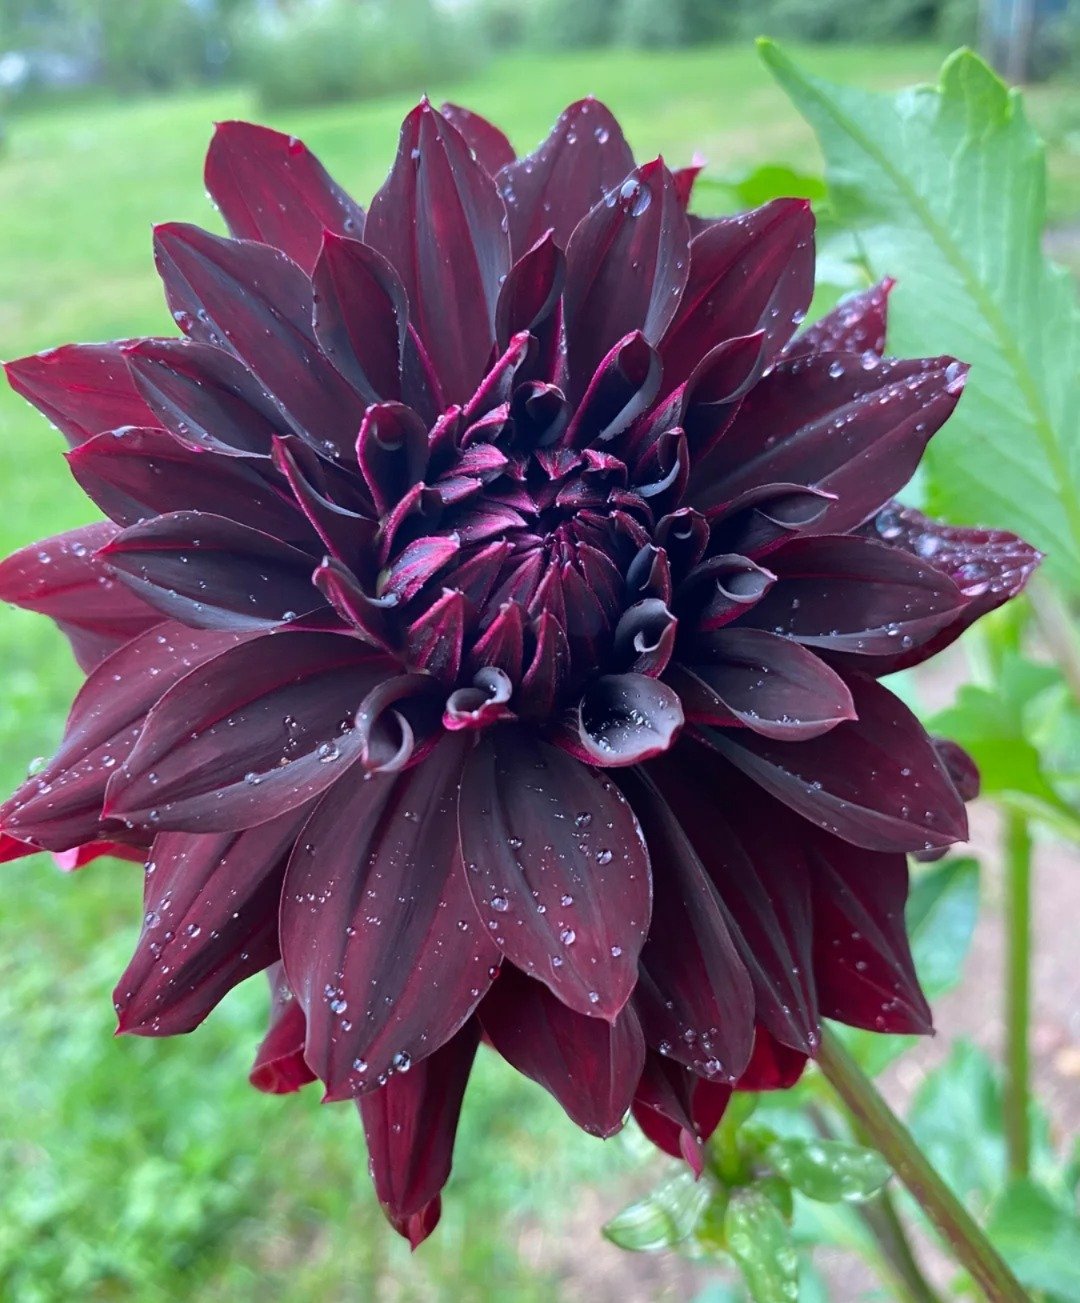 Dark purple Black Magich Dahlia flower with glistening water droplets.